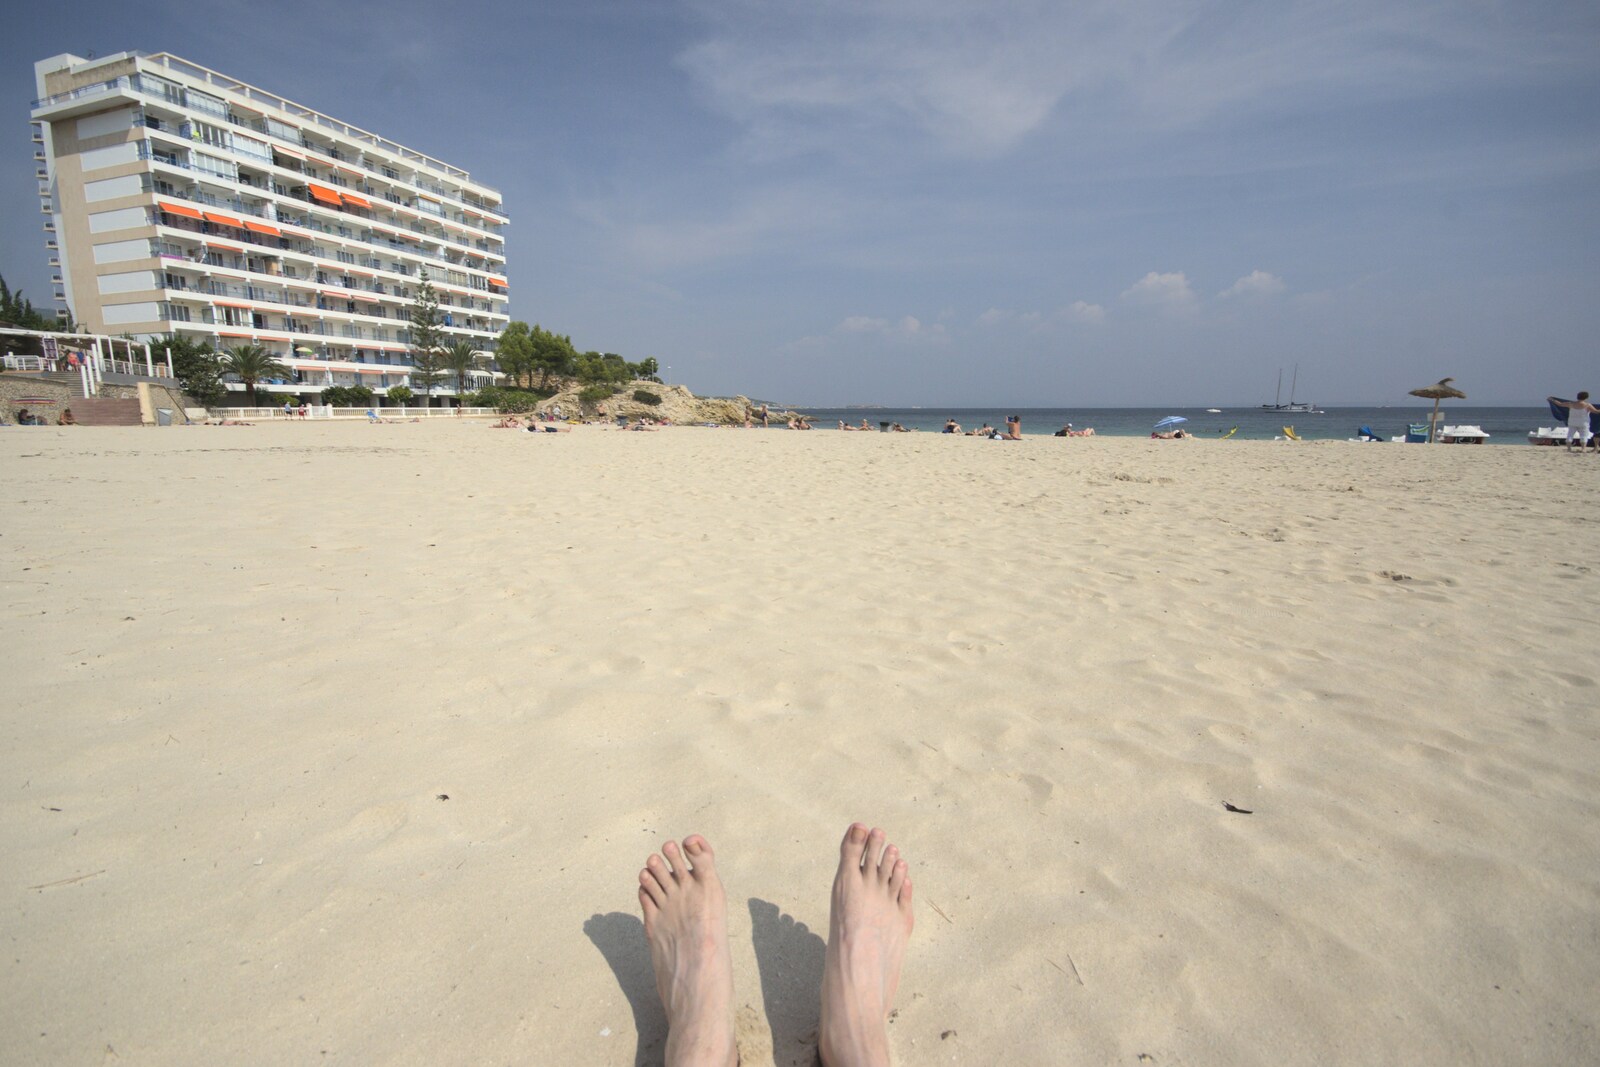 Nosher's feet on the beach from A Postcard From Palmanova, Mallorca, Spain - 21st September 2009